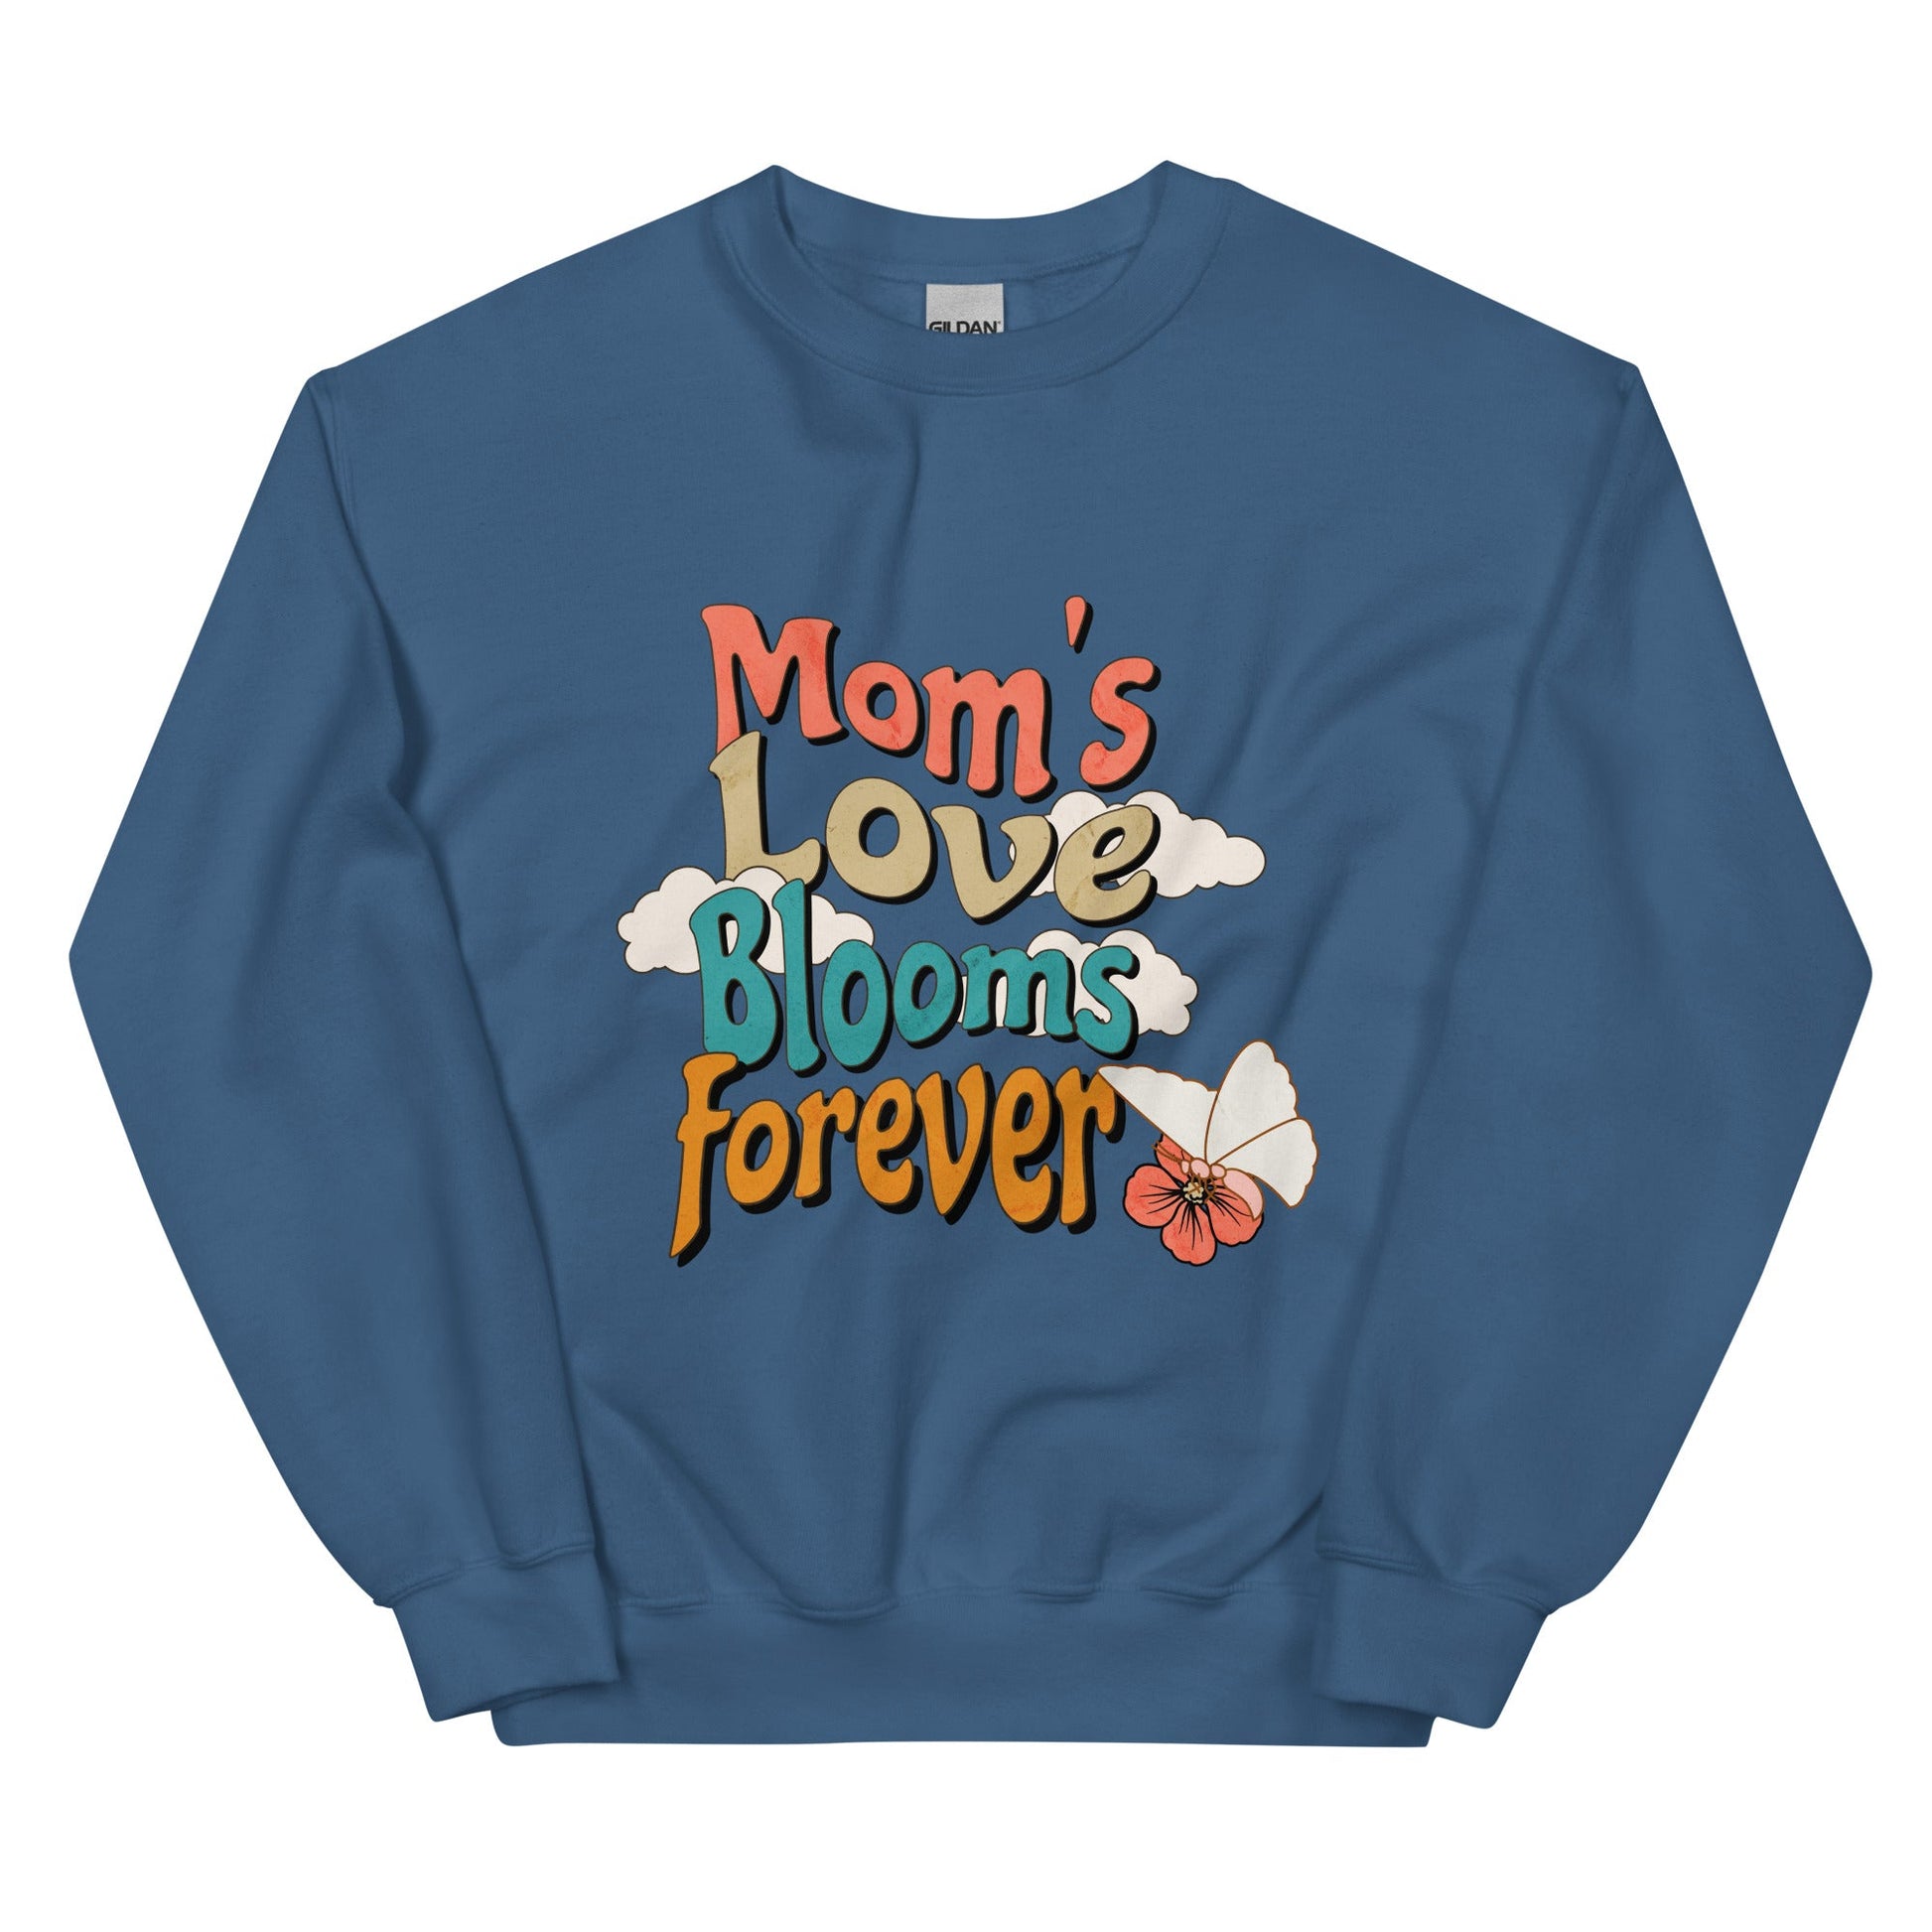 Mom's Love Blooms Forever Crewneck Sweatshirt-crewneck-Indigo Blue-S-mysticalcherry